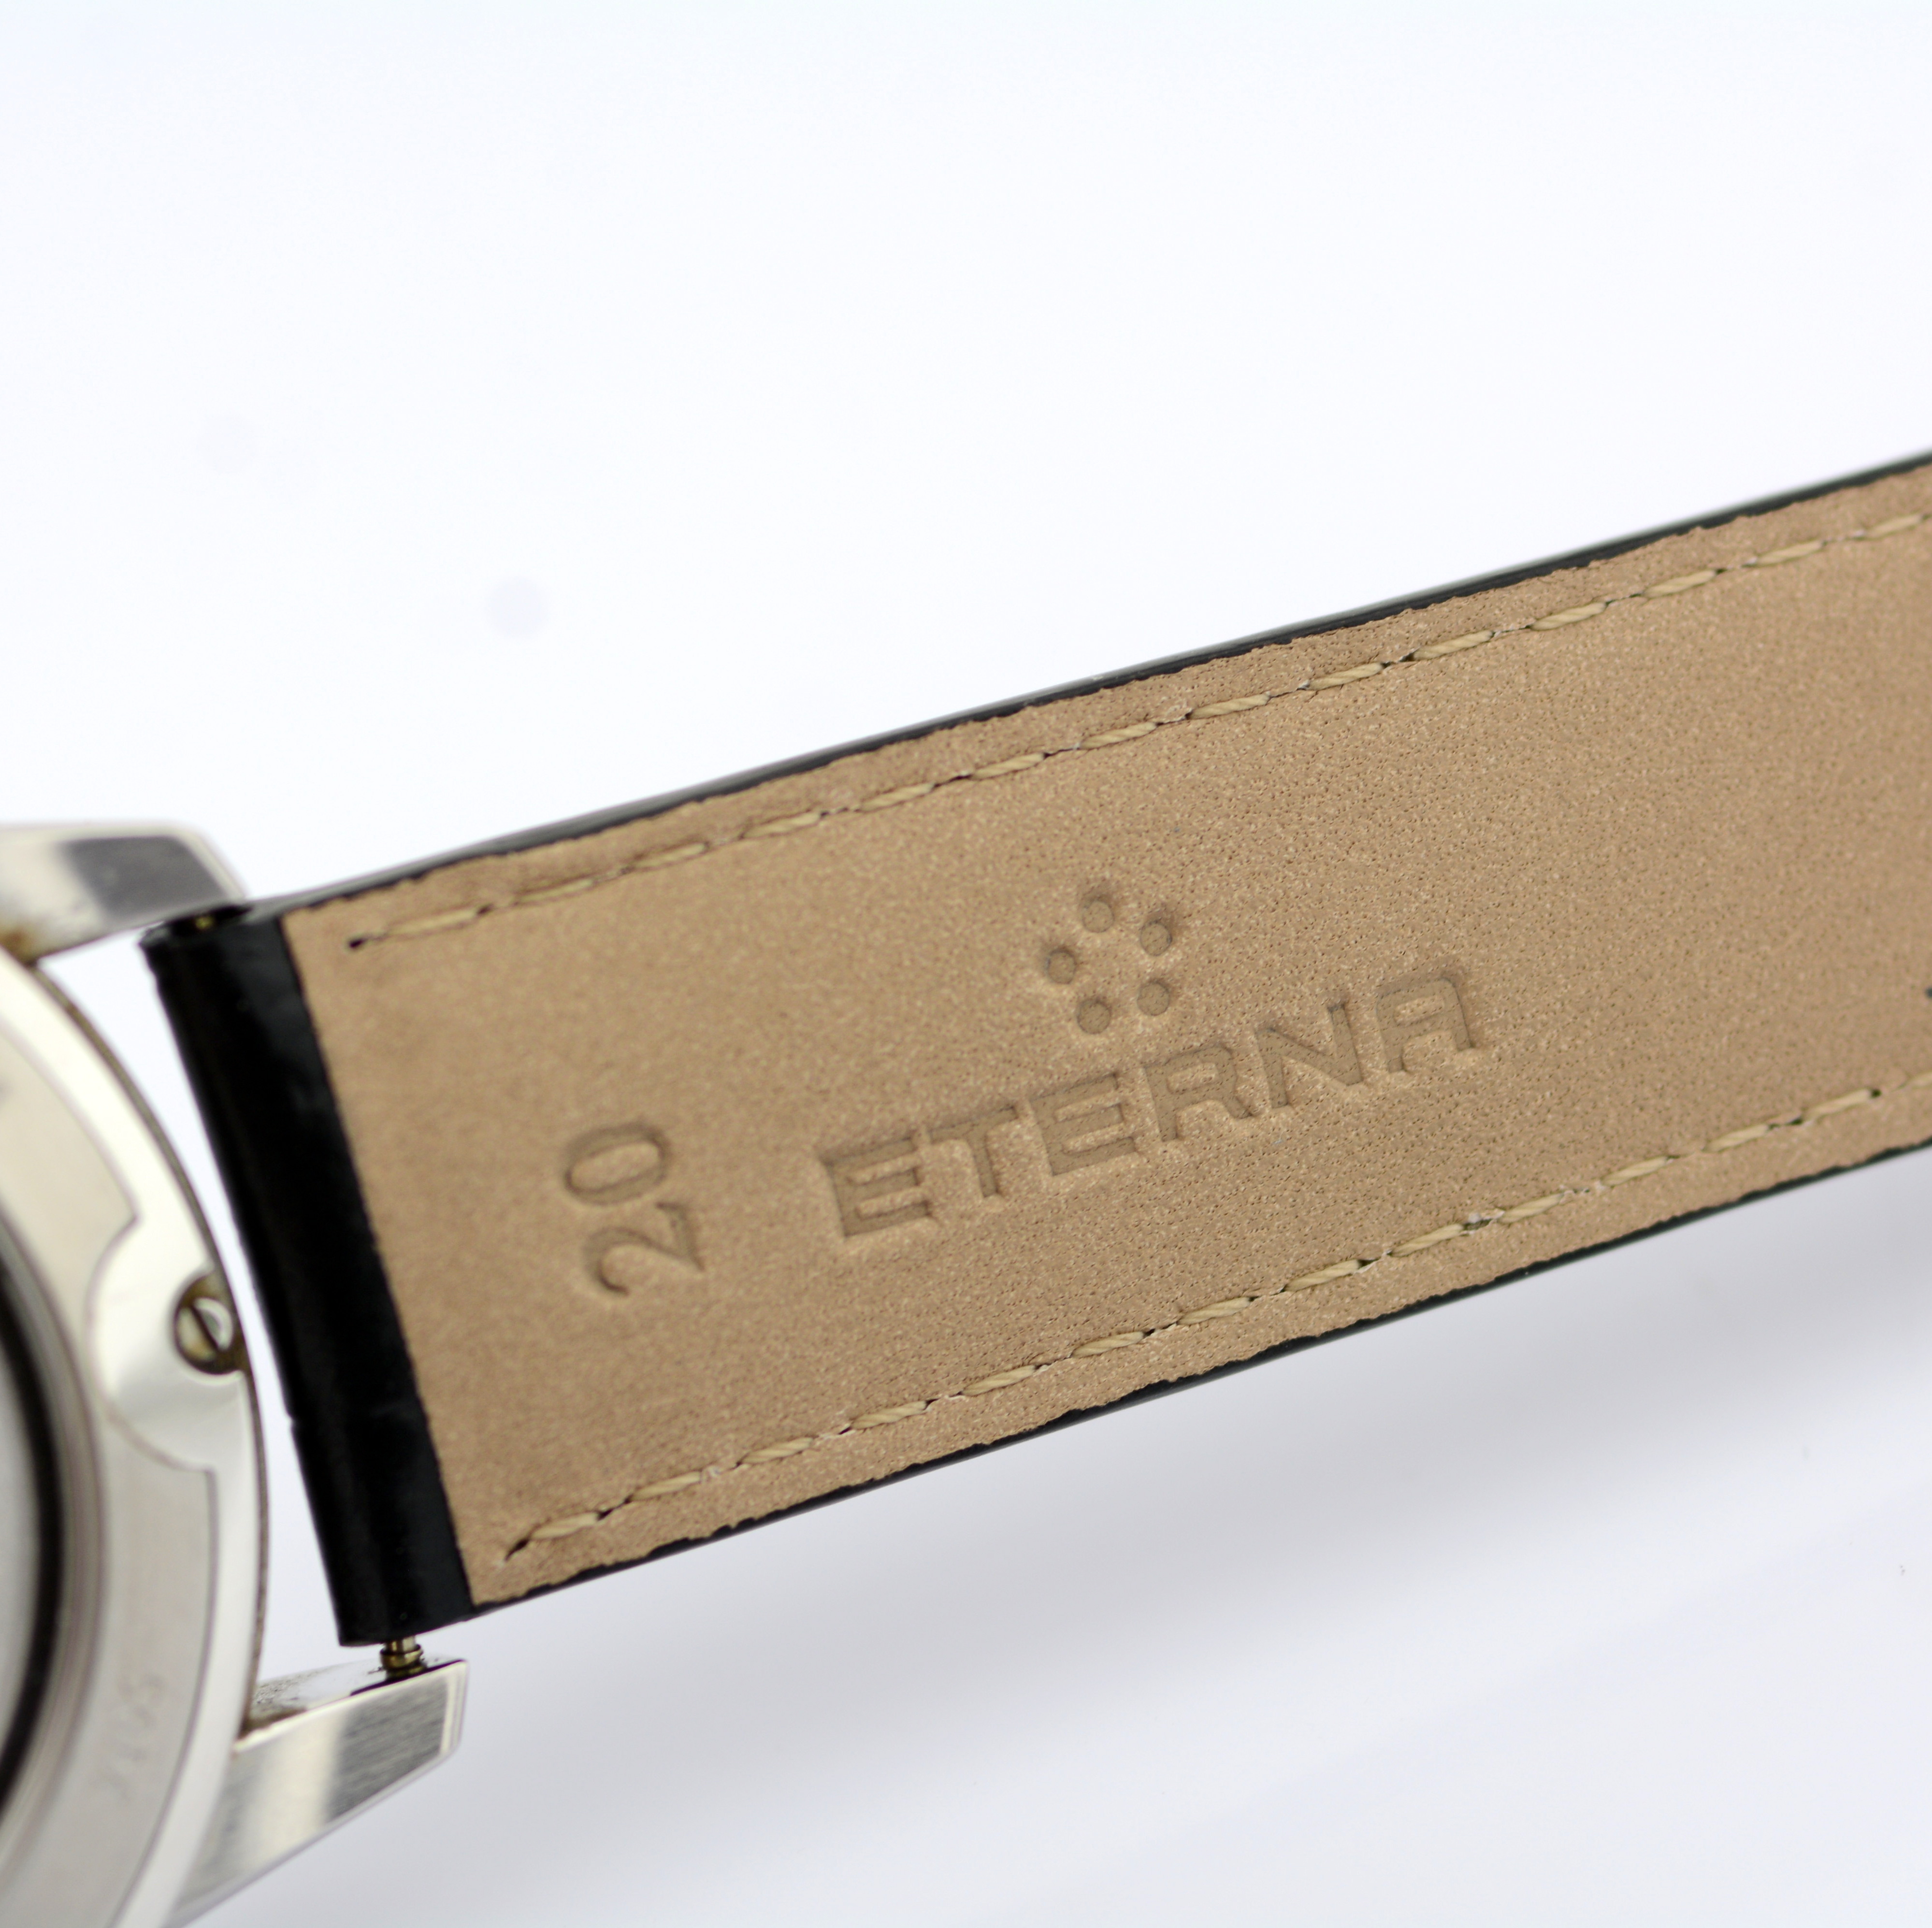 Eterna / Adventic GMT Manufacture Automatic Date - Gentlmen's Steel Wrist Watch - Image 10 of 10